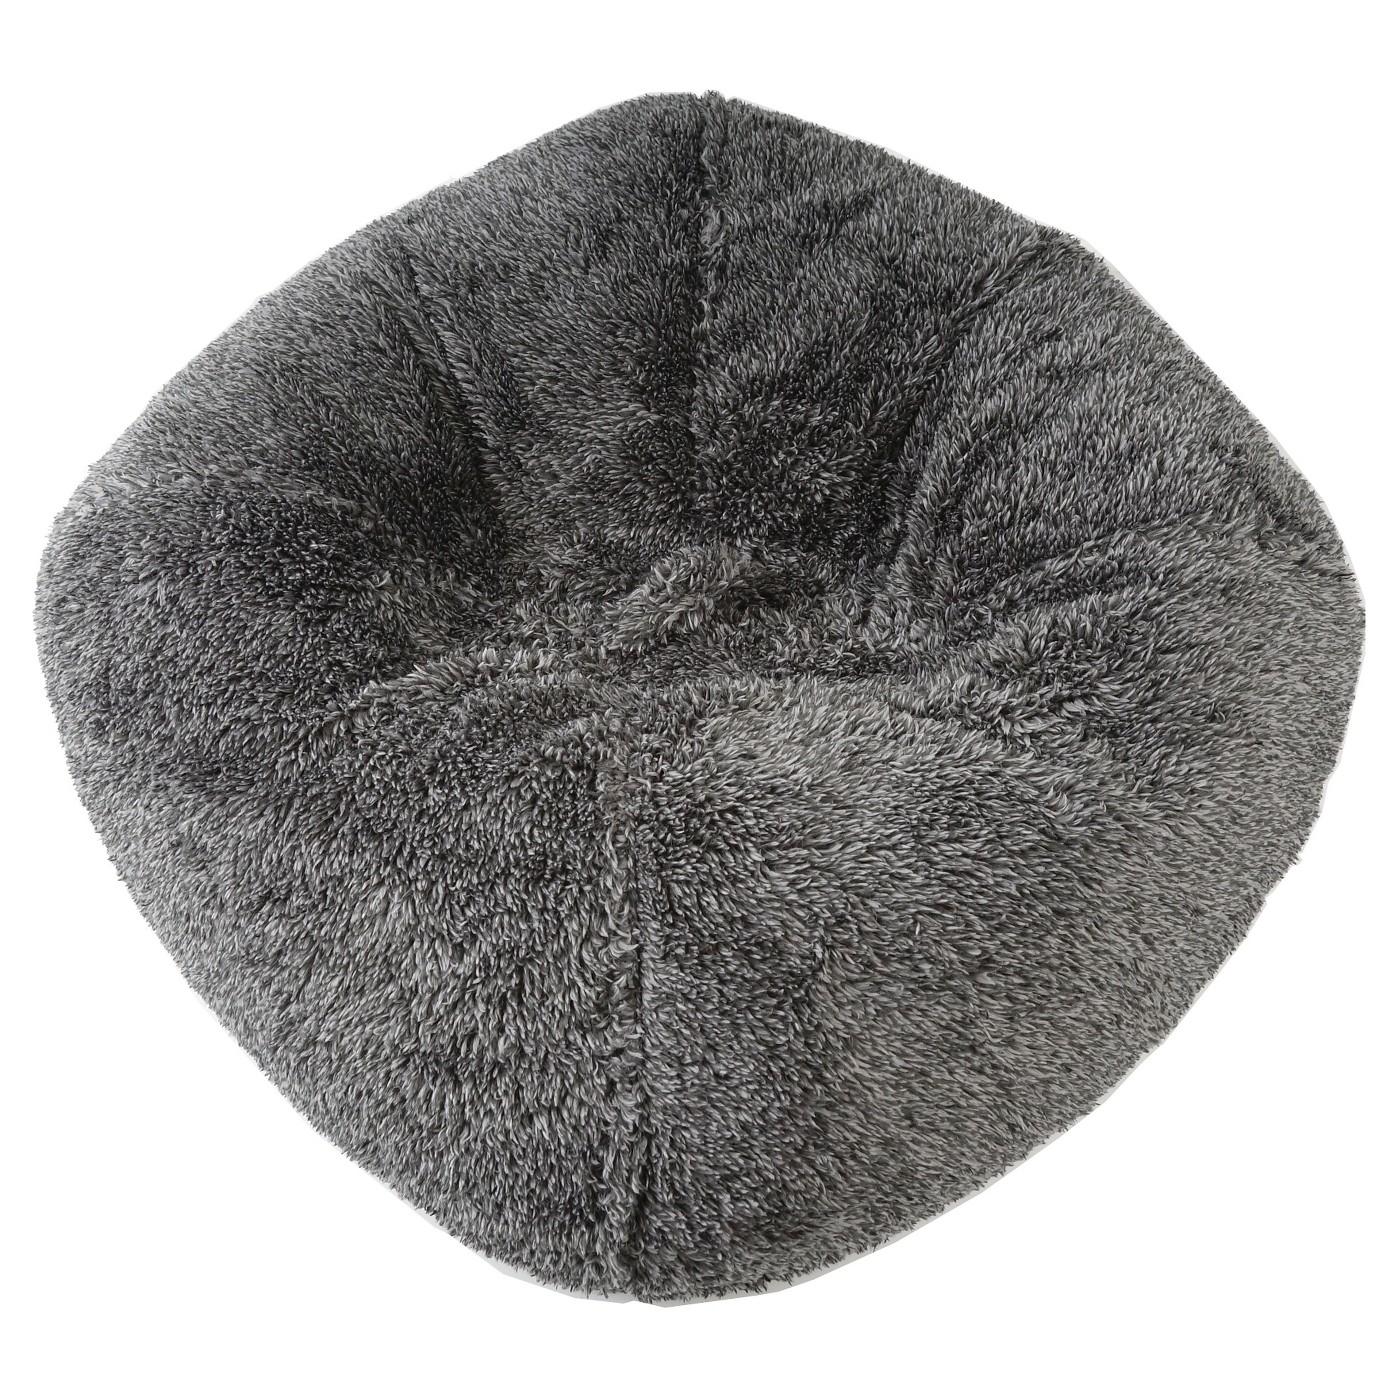 Fuzzy Bean Bag Chair - Pillowfortâ„¢ - image 1 of 1